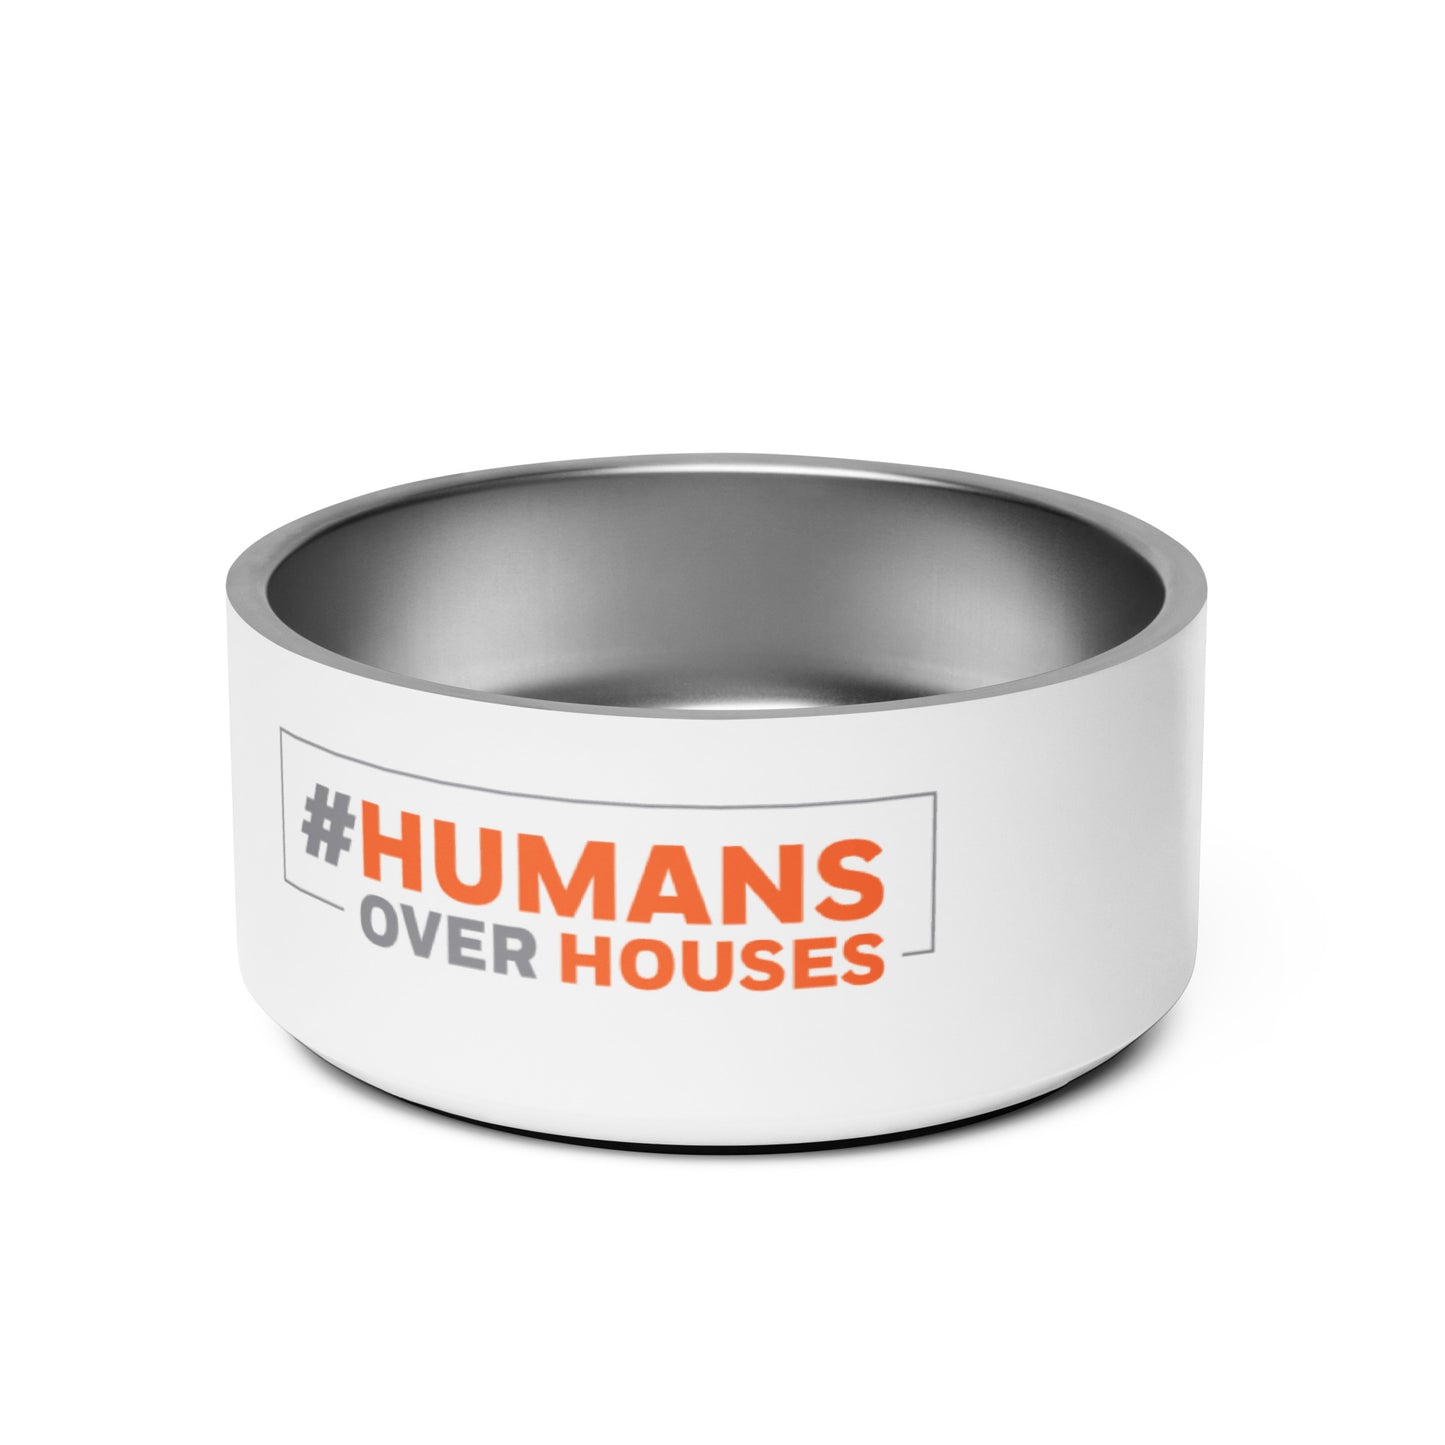 HumansOverHouses Pet bowl